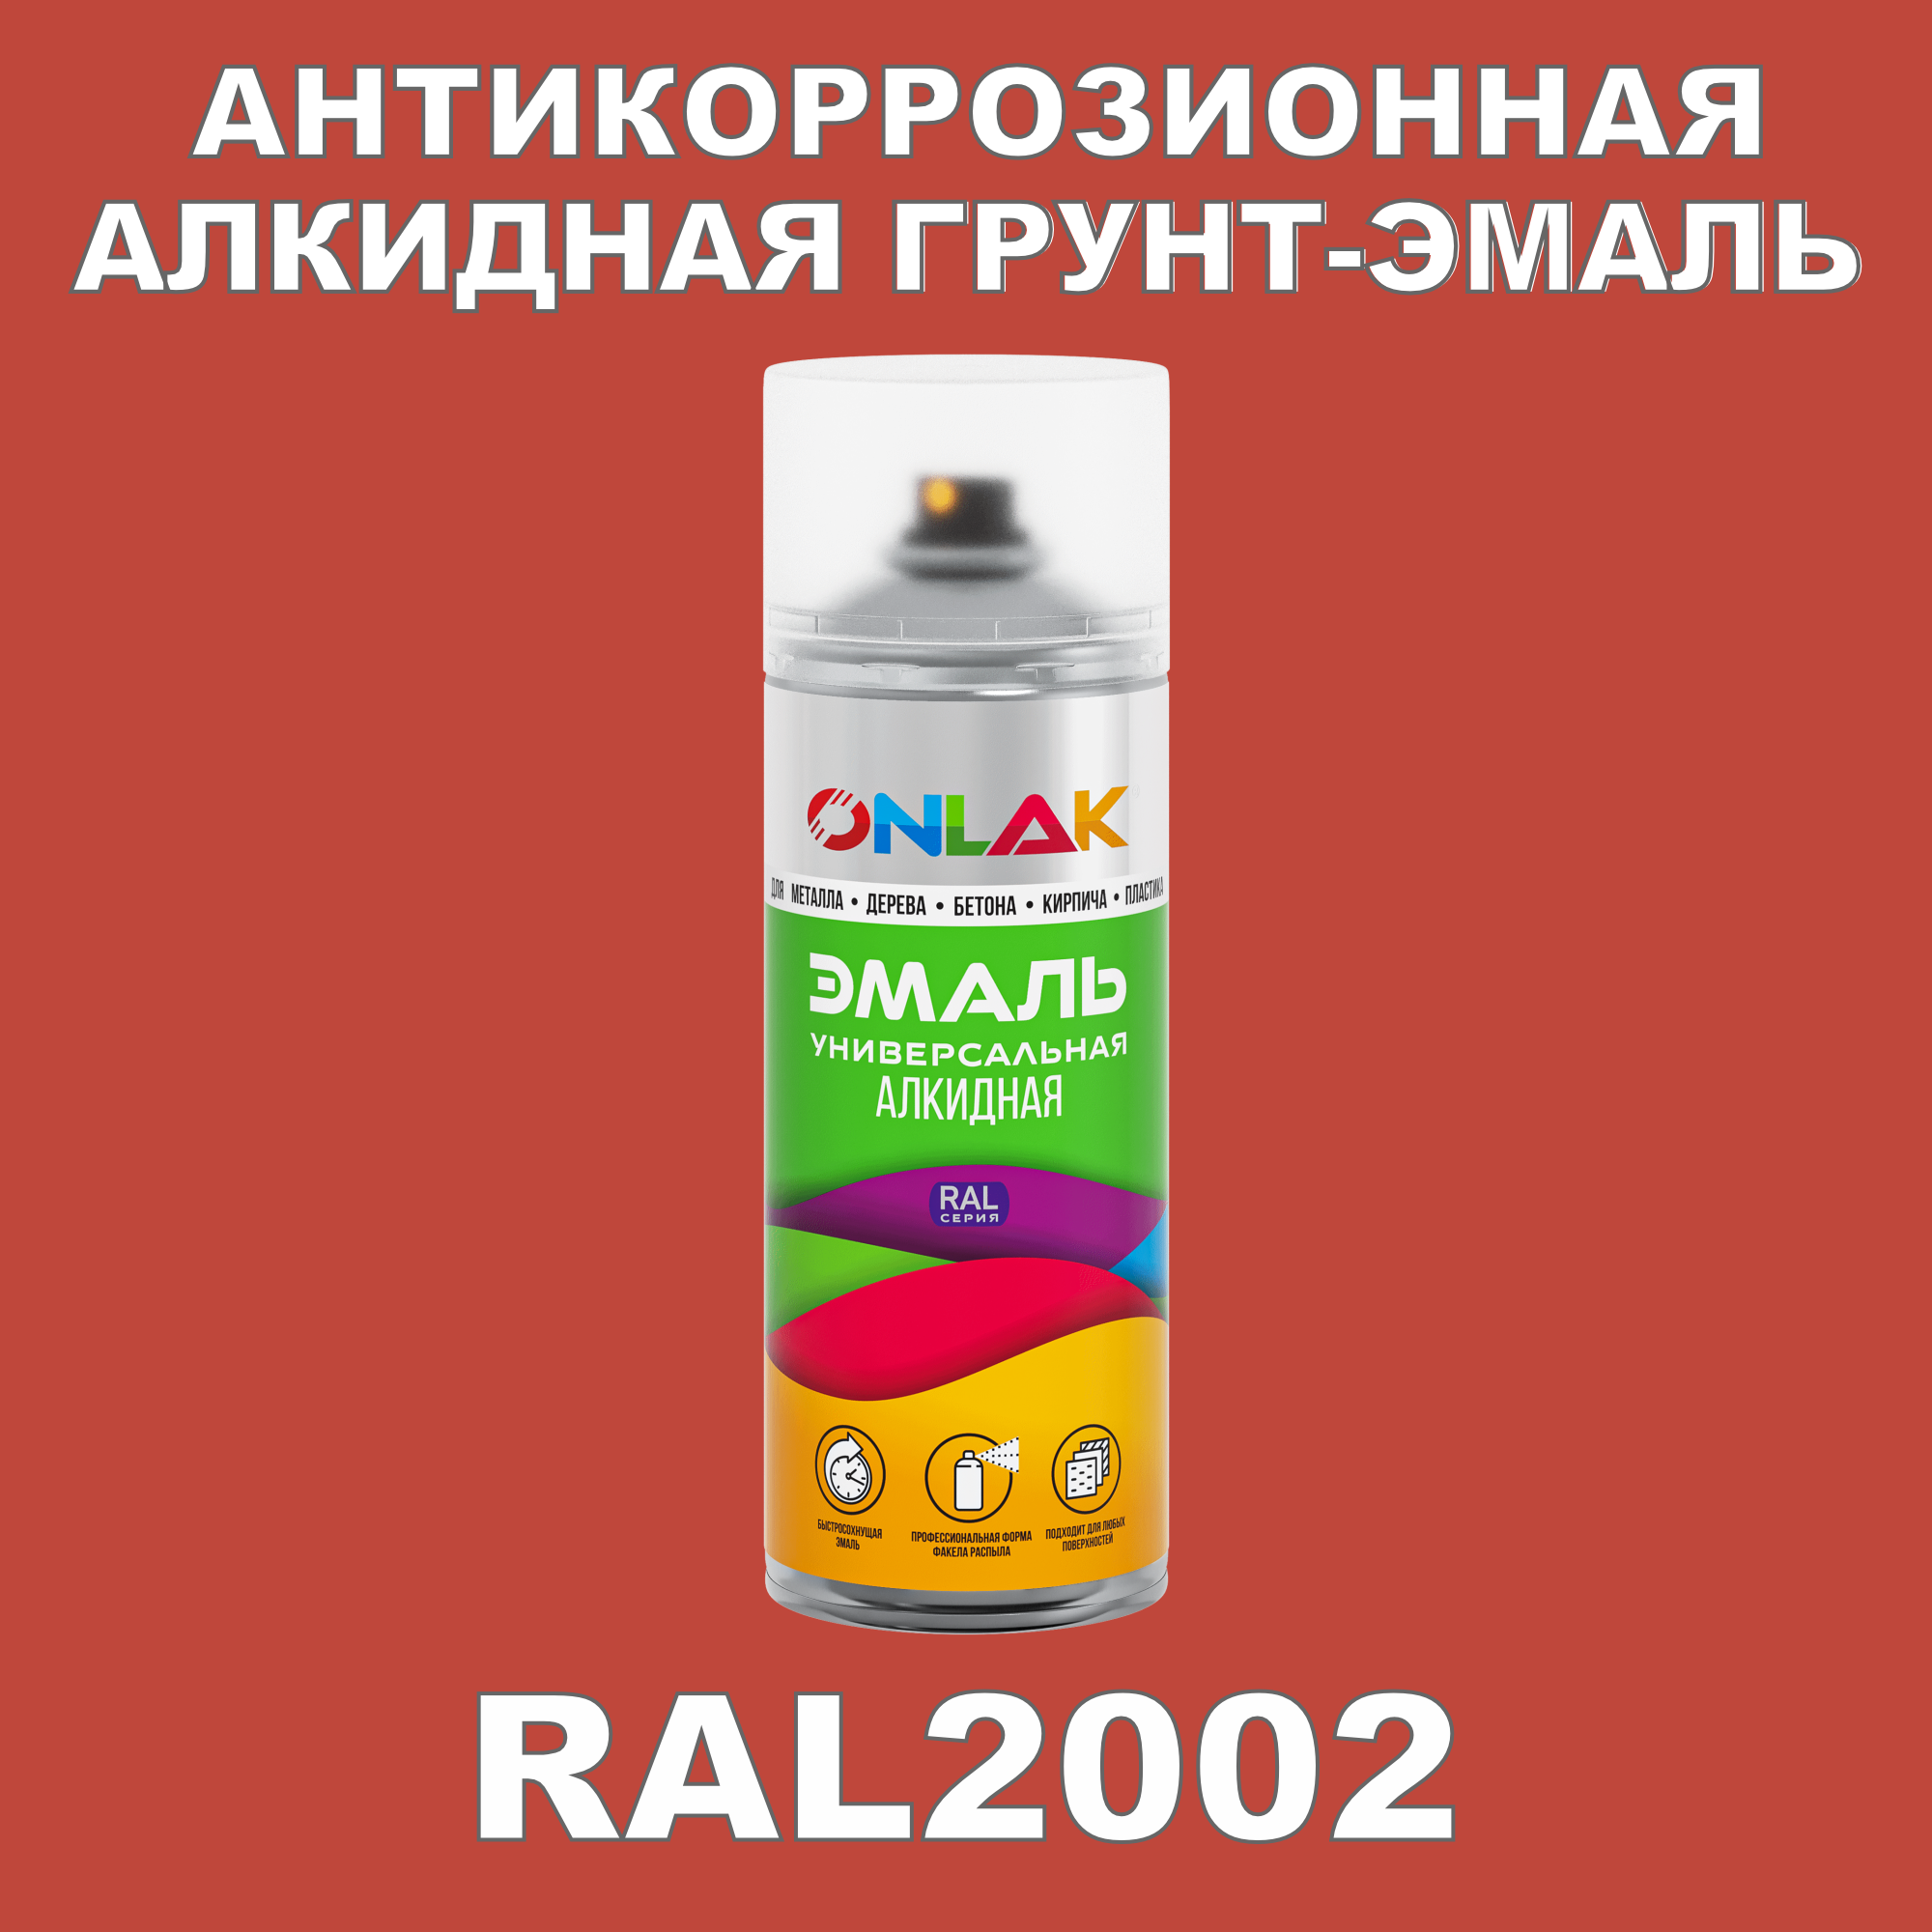 Антикоррозионная грунт-эмаль ONLAK RAL 2002,оранжевый,701 мл